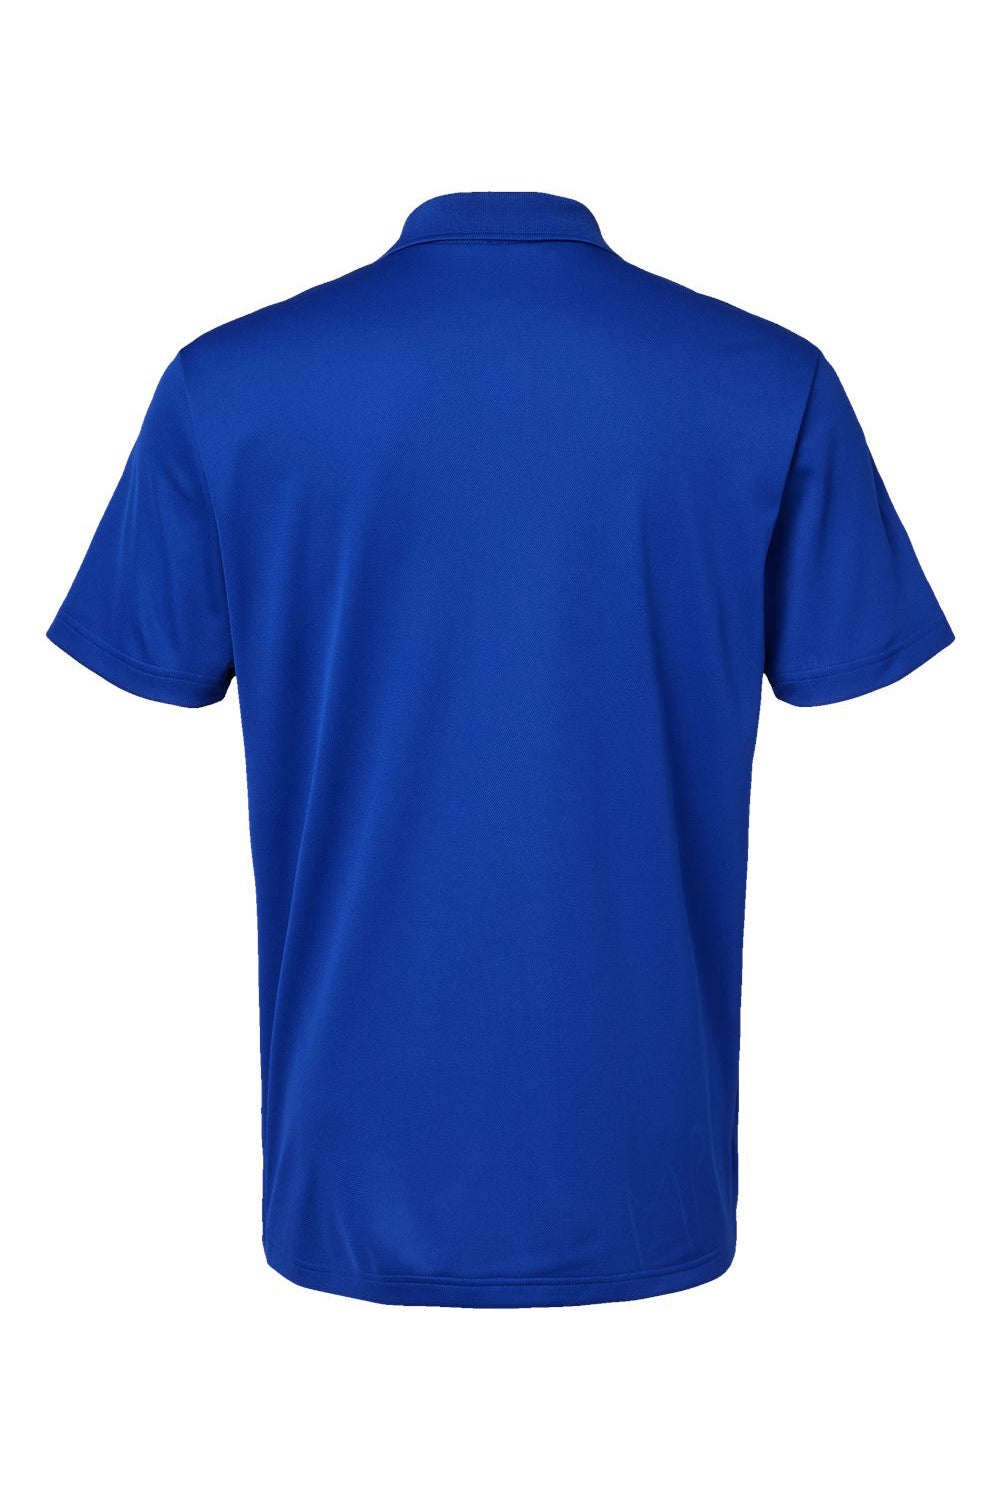 Adidas A430 Mens Basic Short Sleeve Polo Shirt Collegiate Royal Blue Flat Back